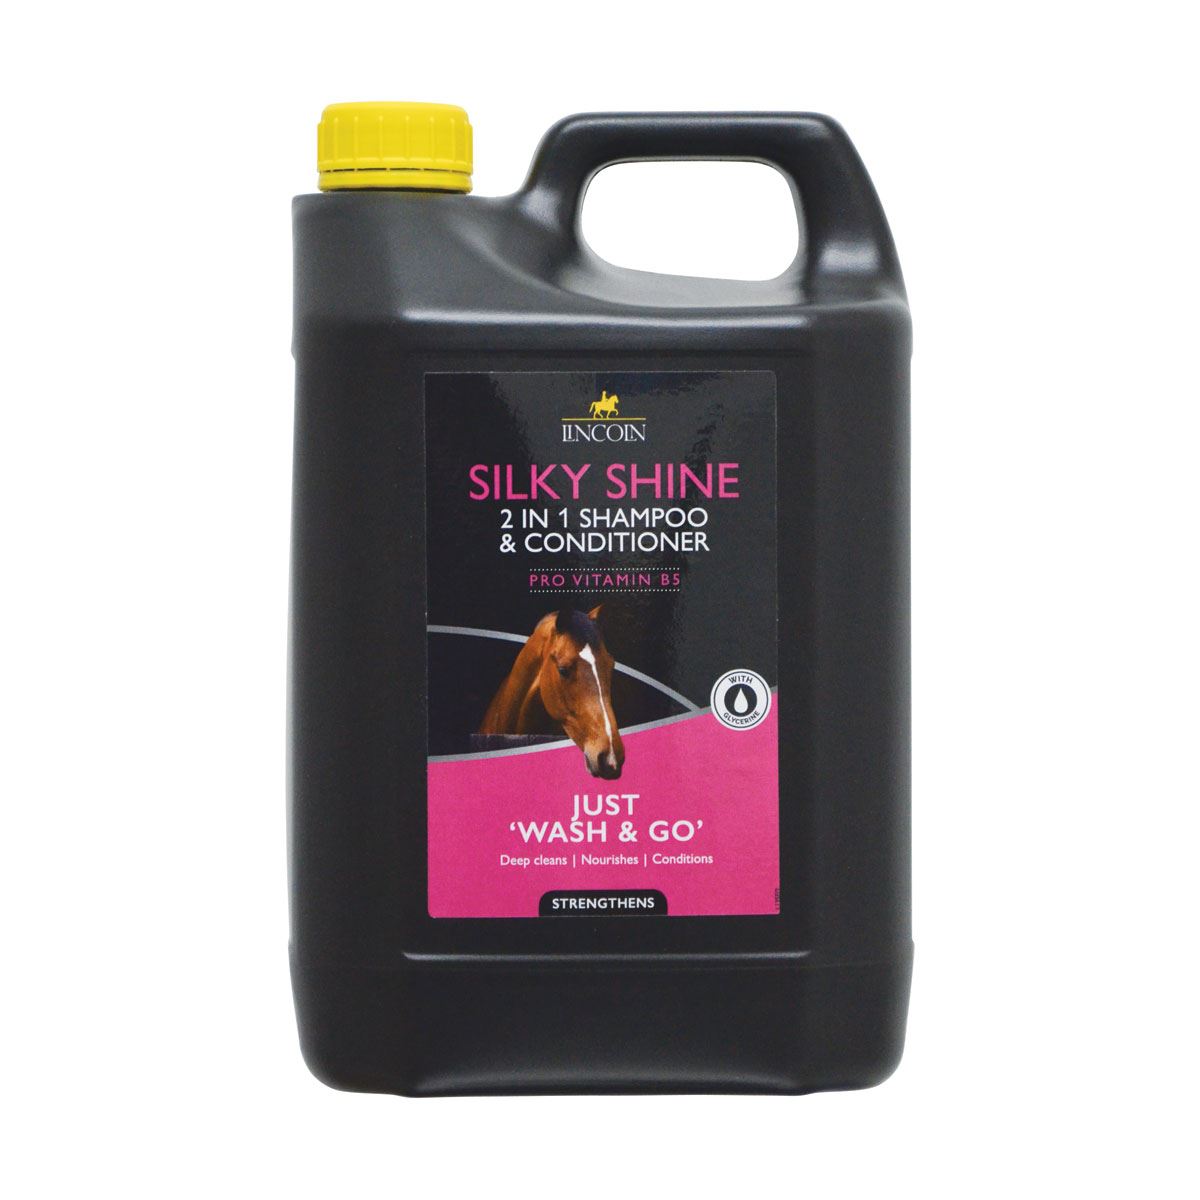 Lincoln Silky Shine 2 In 1 Shampoo & Conditioner - Just Horse Riders